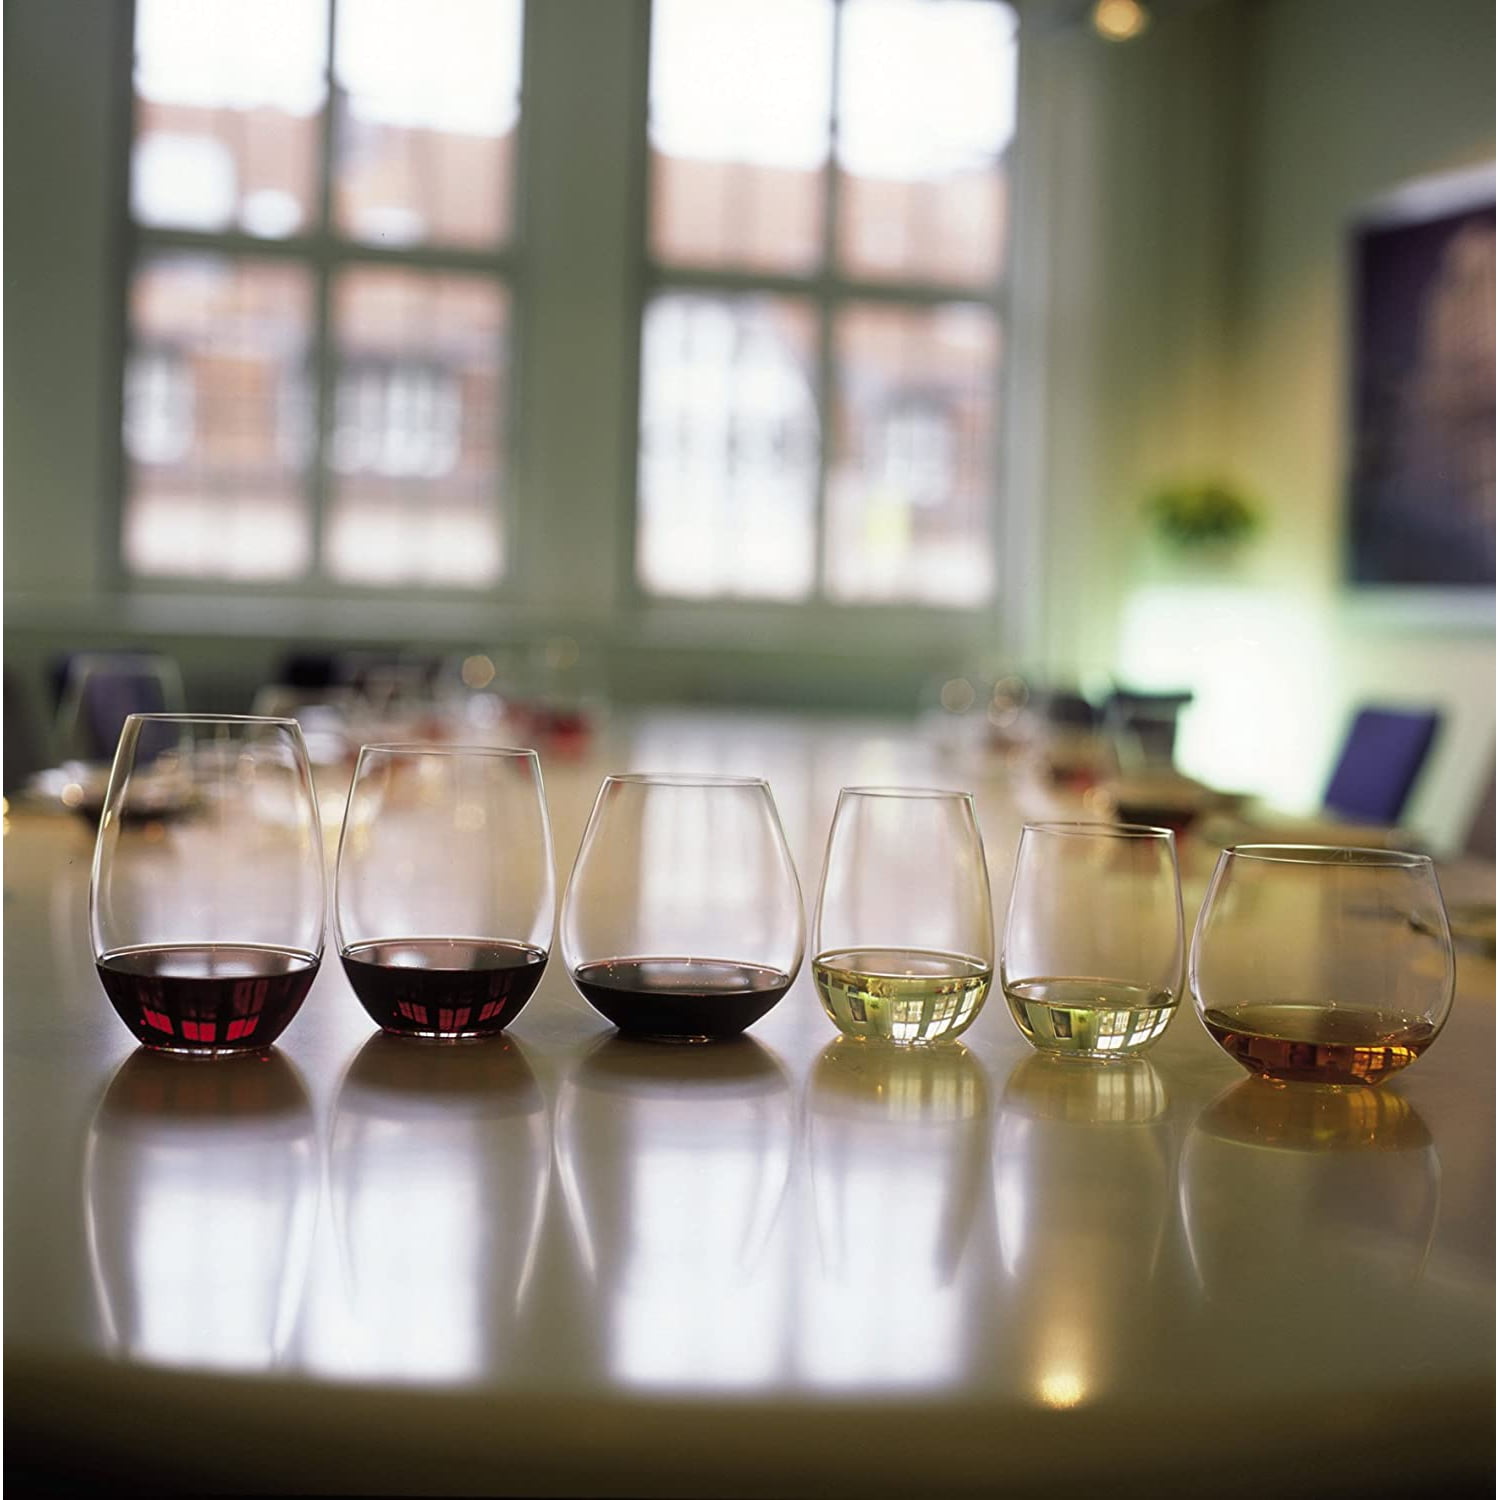 Wine Glasses, Set of 2 O Cabernet & Merlot Tumblers